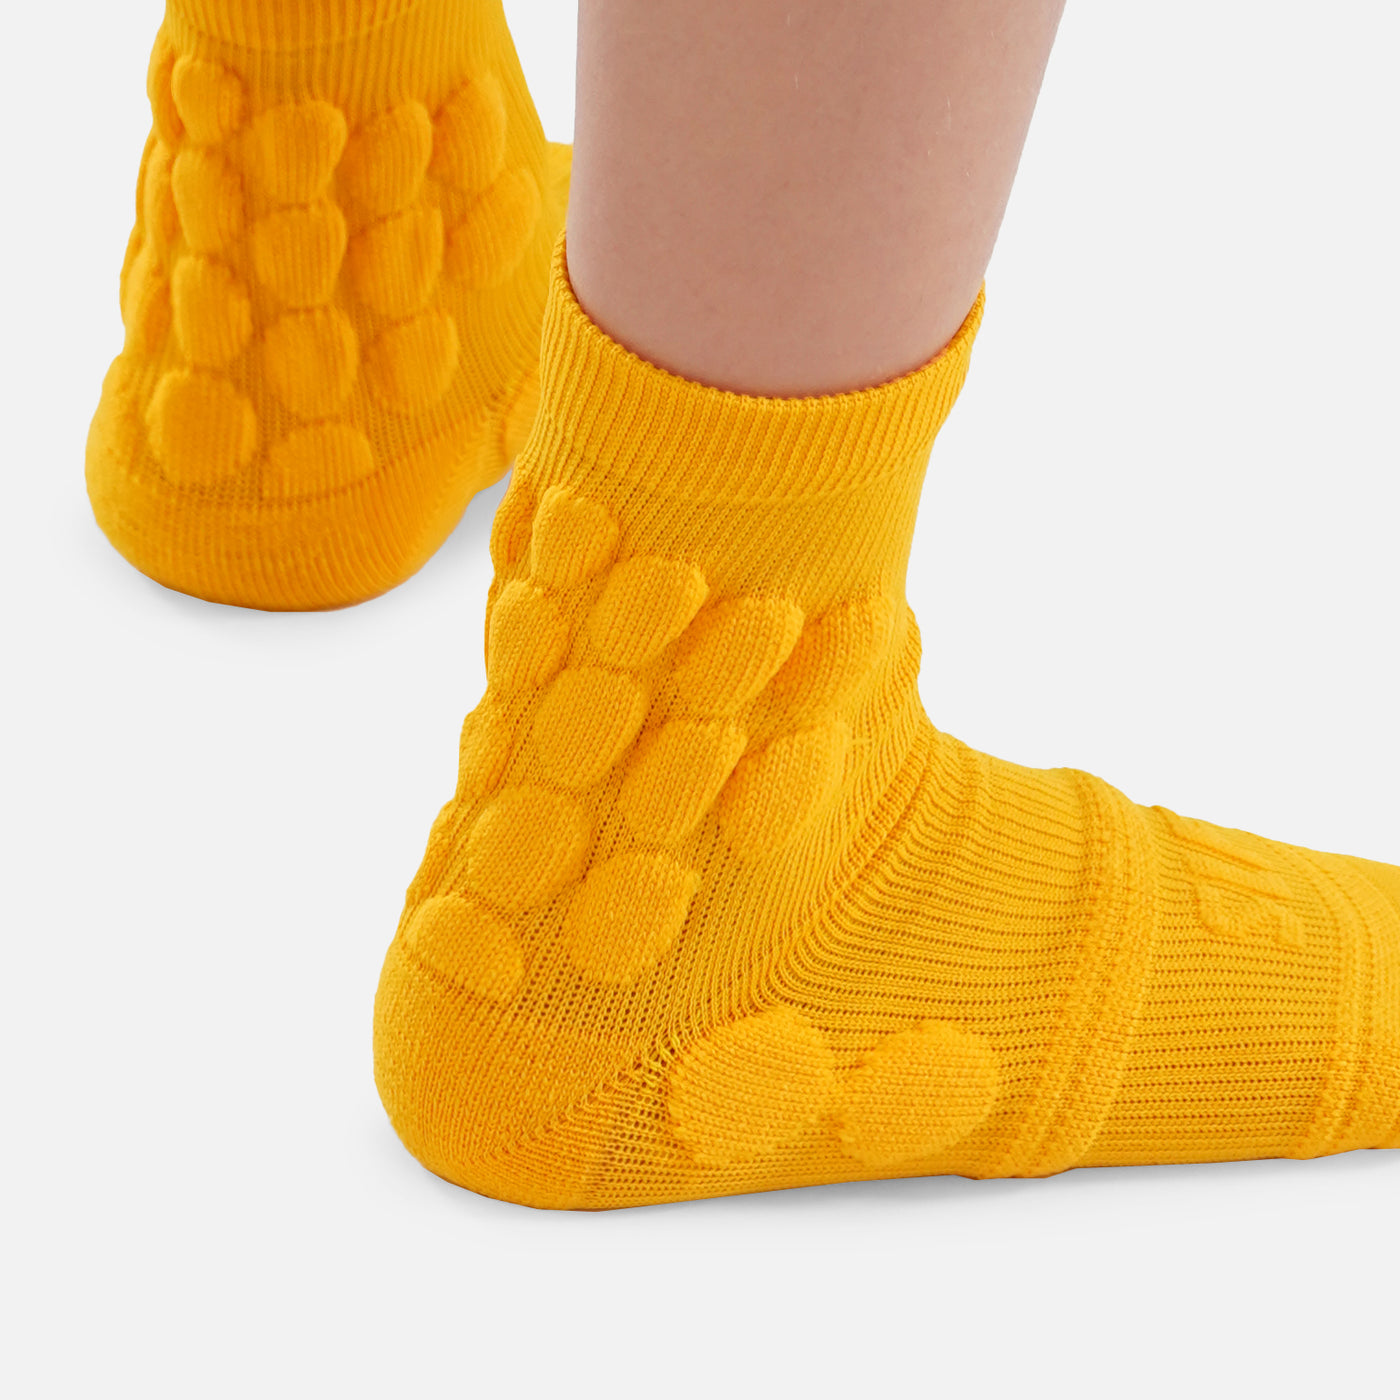 Hue Yellow Gold Football Padded Short Kids Socks